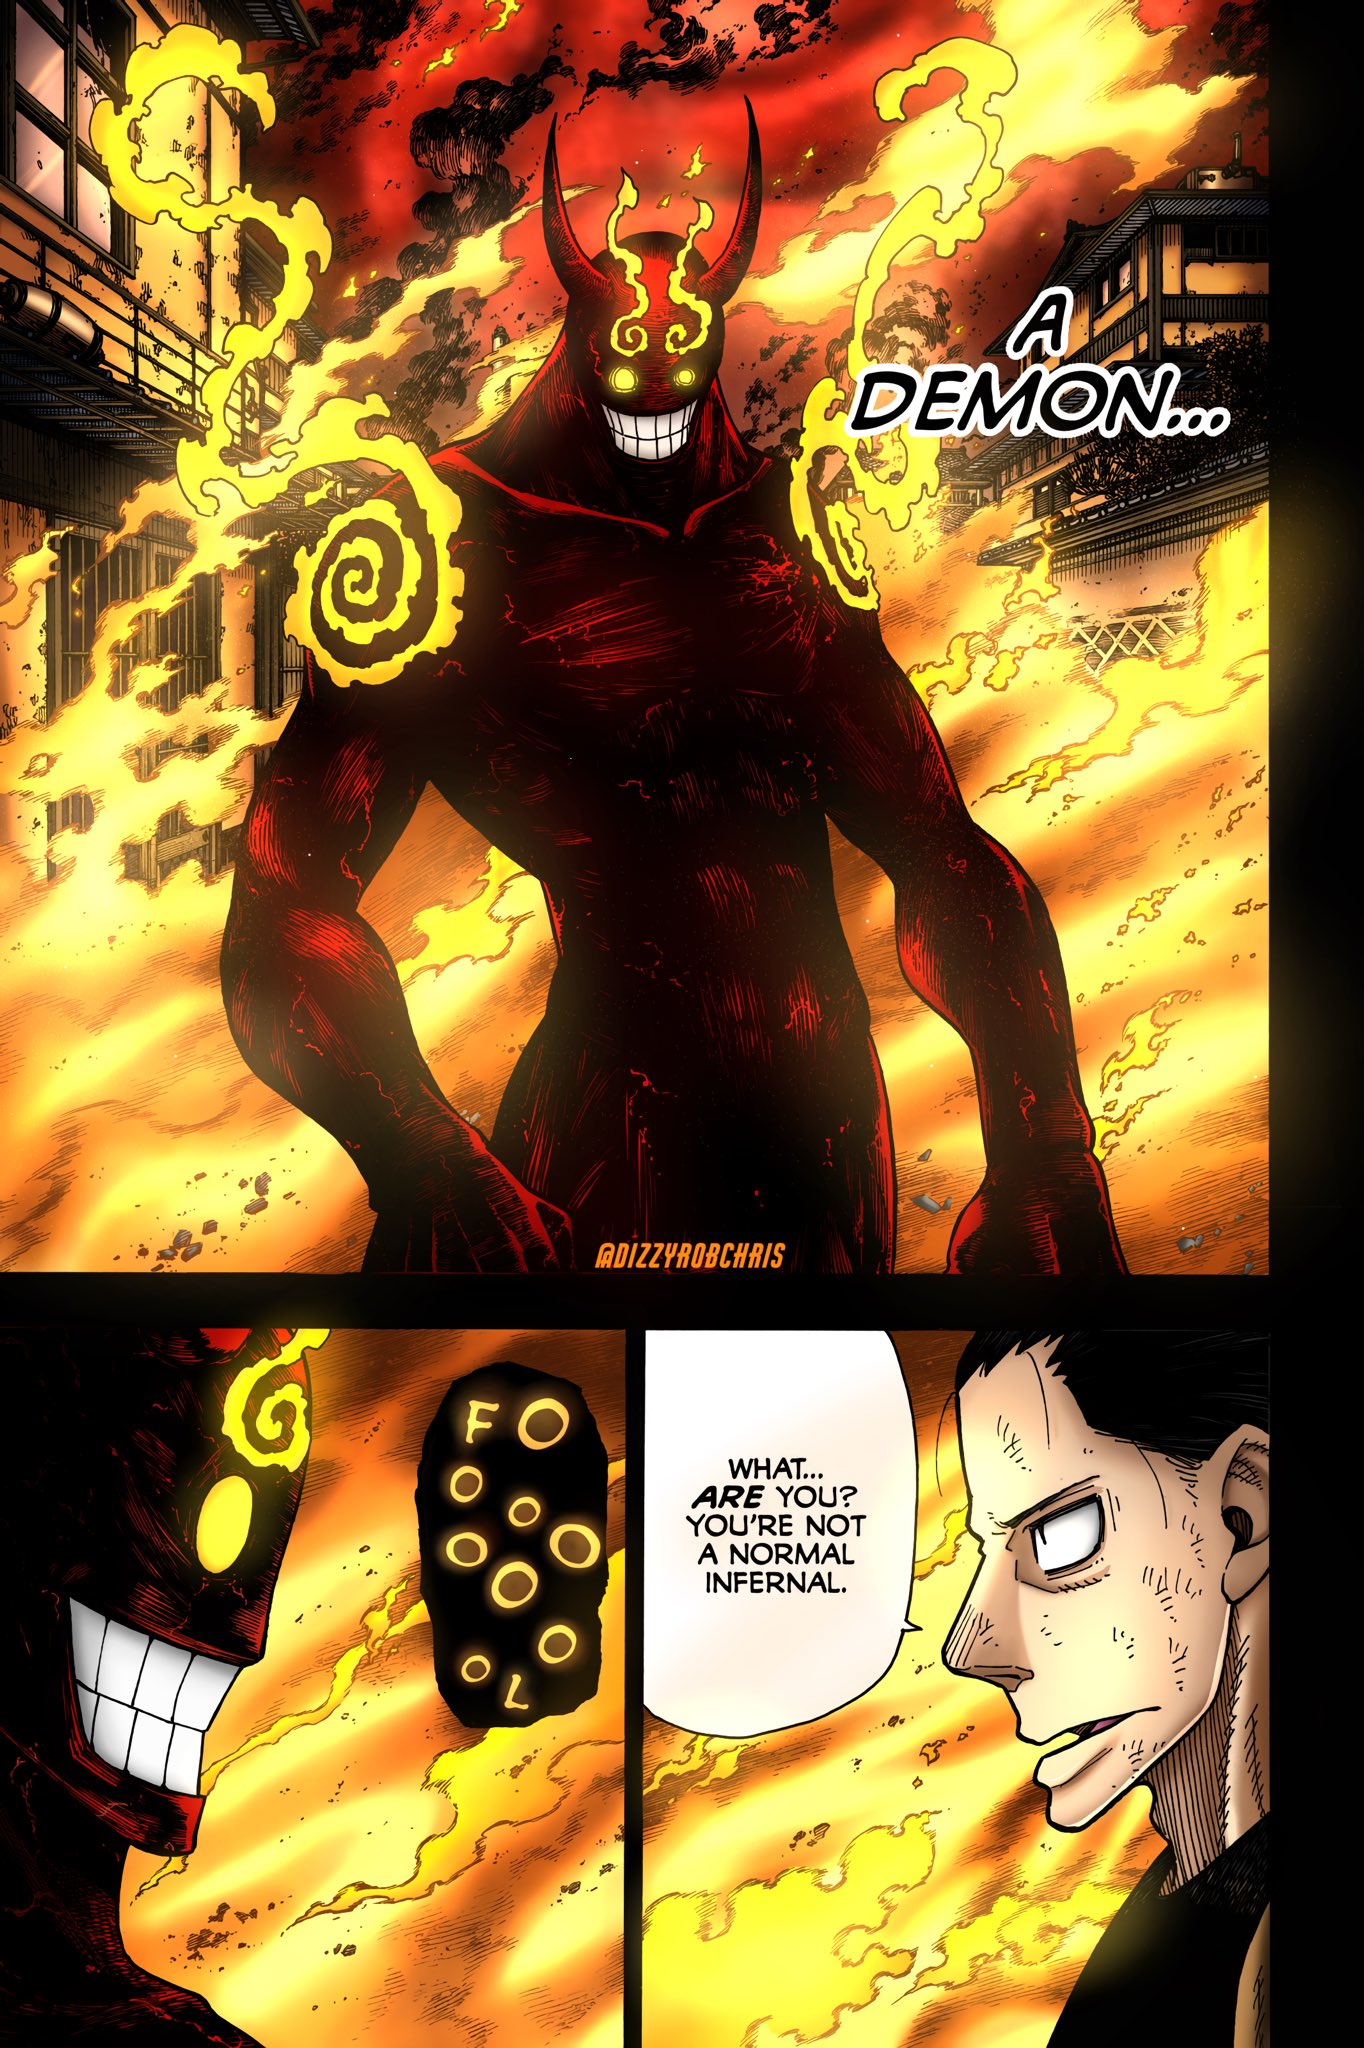 First Generation Infernal/Demons Manga: Fire Force #fireforce